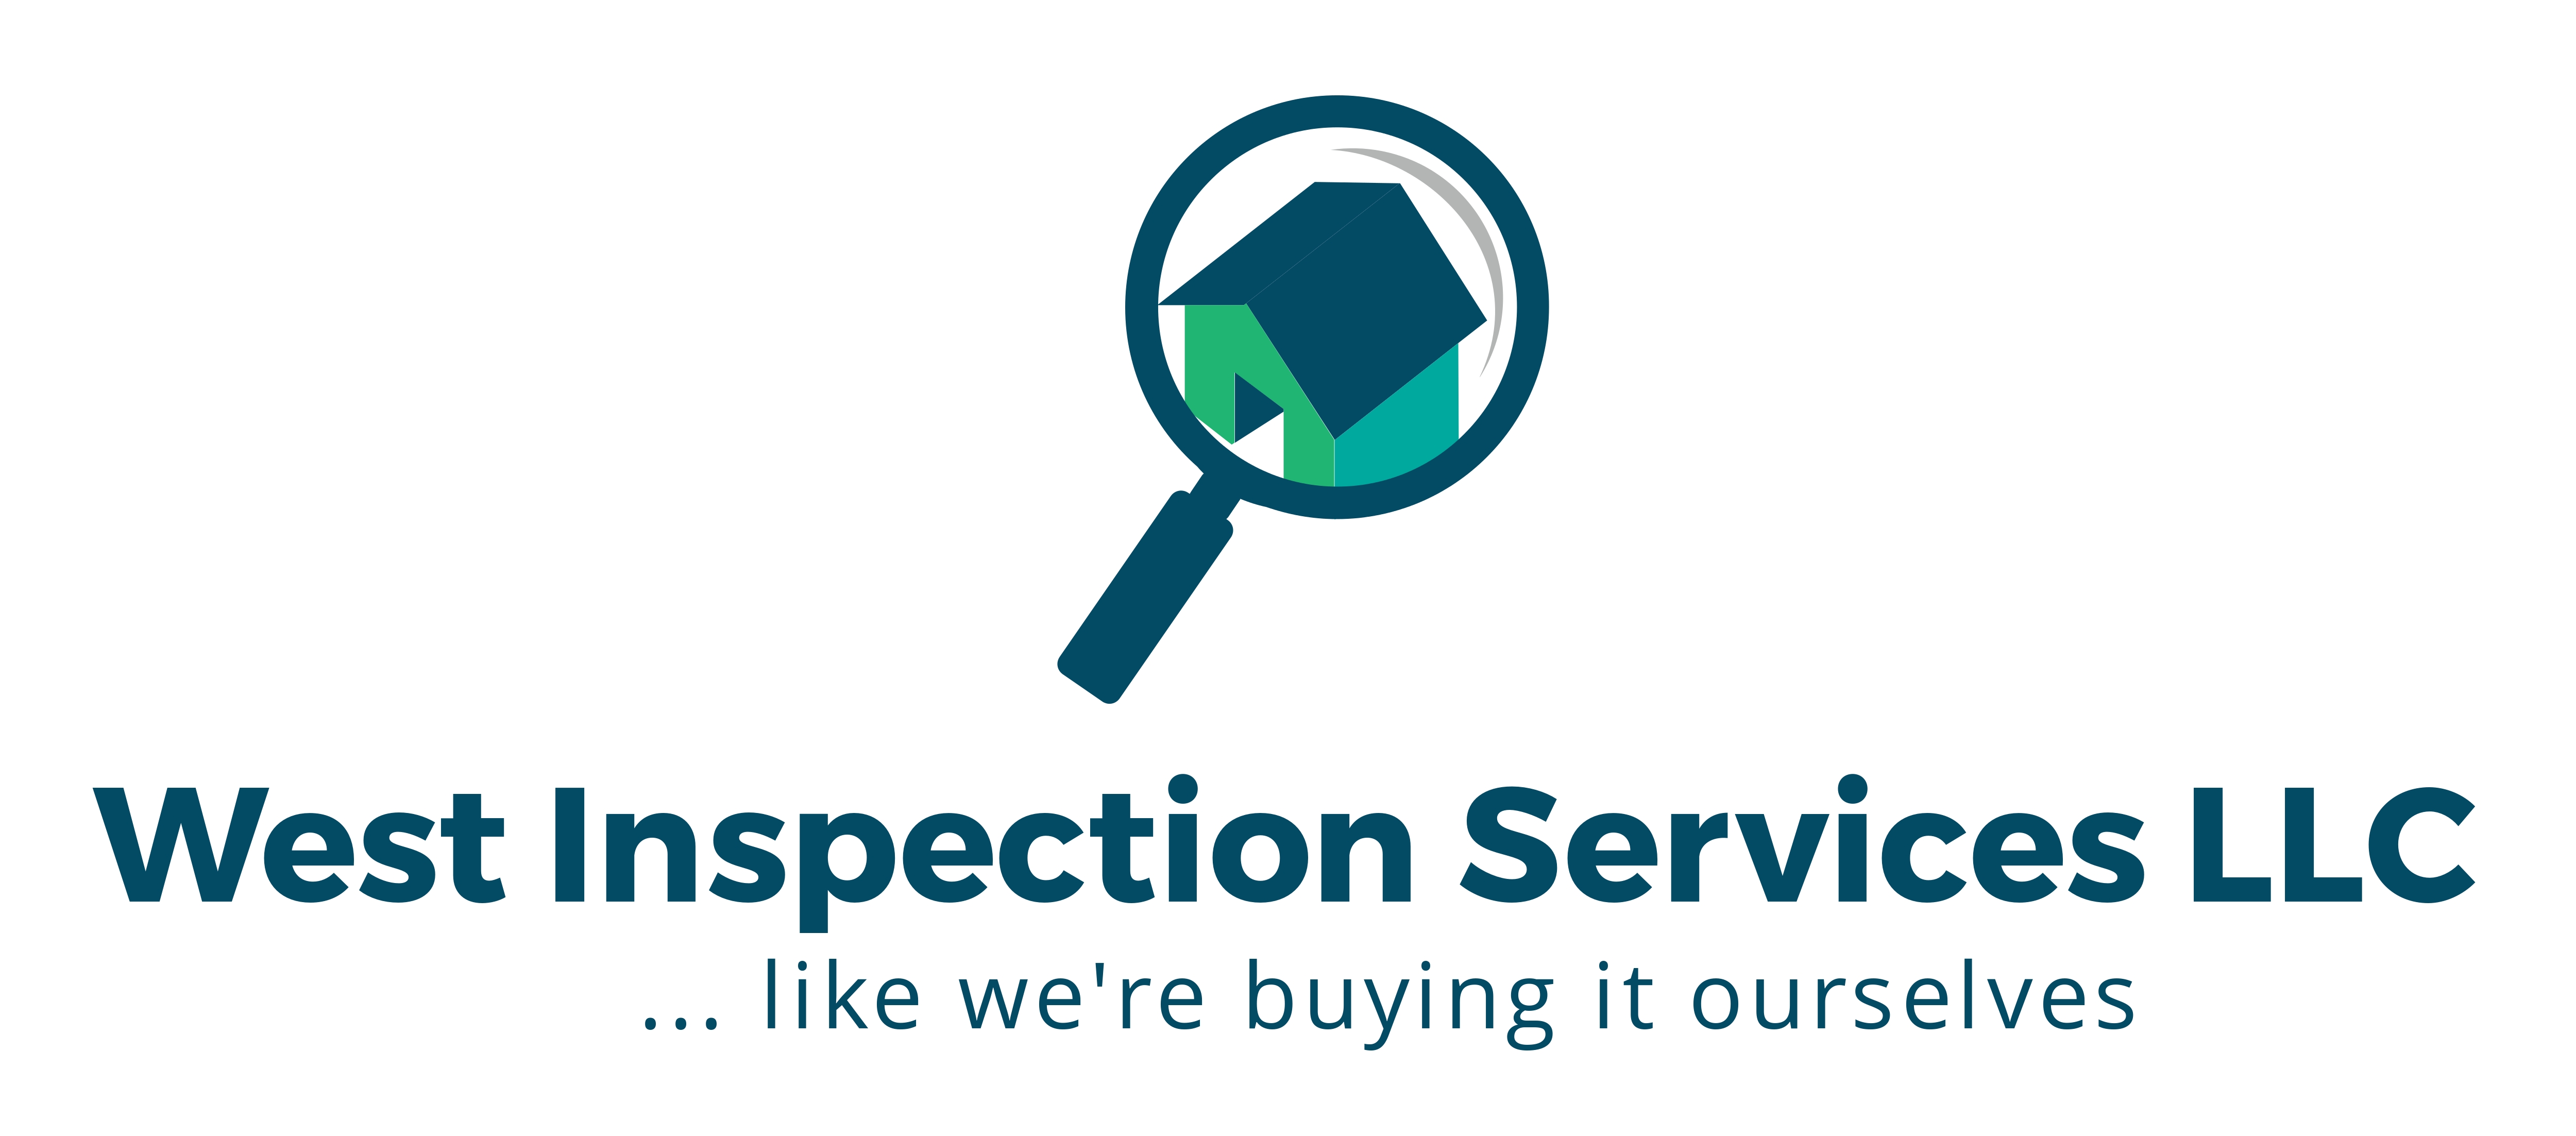 West Inspection Services, LLC logo